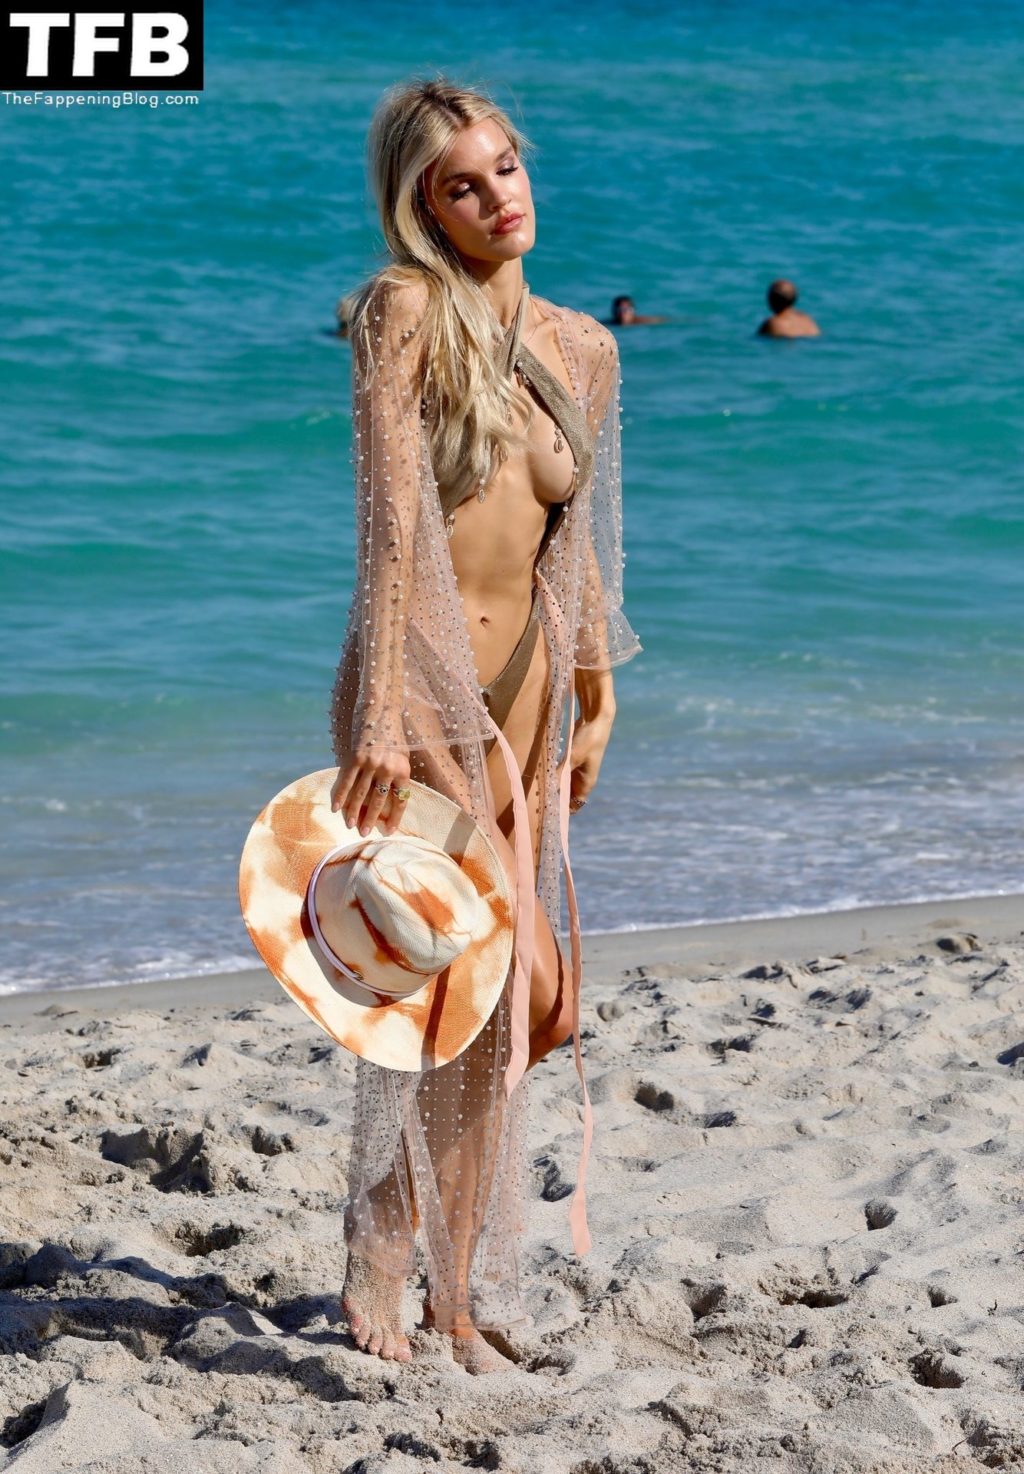 Joy Corrigan Sexy The Fappening Blog 2 3 1024x1474 - Joy Corrigan Shows Off Her Sexy Bikini Body on the Beach in Miami (57 Photos)